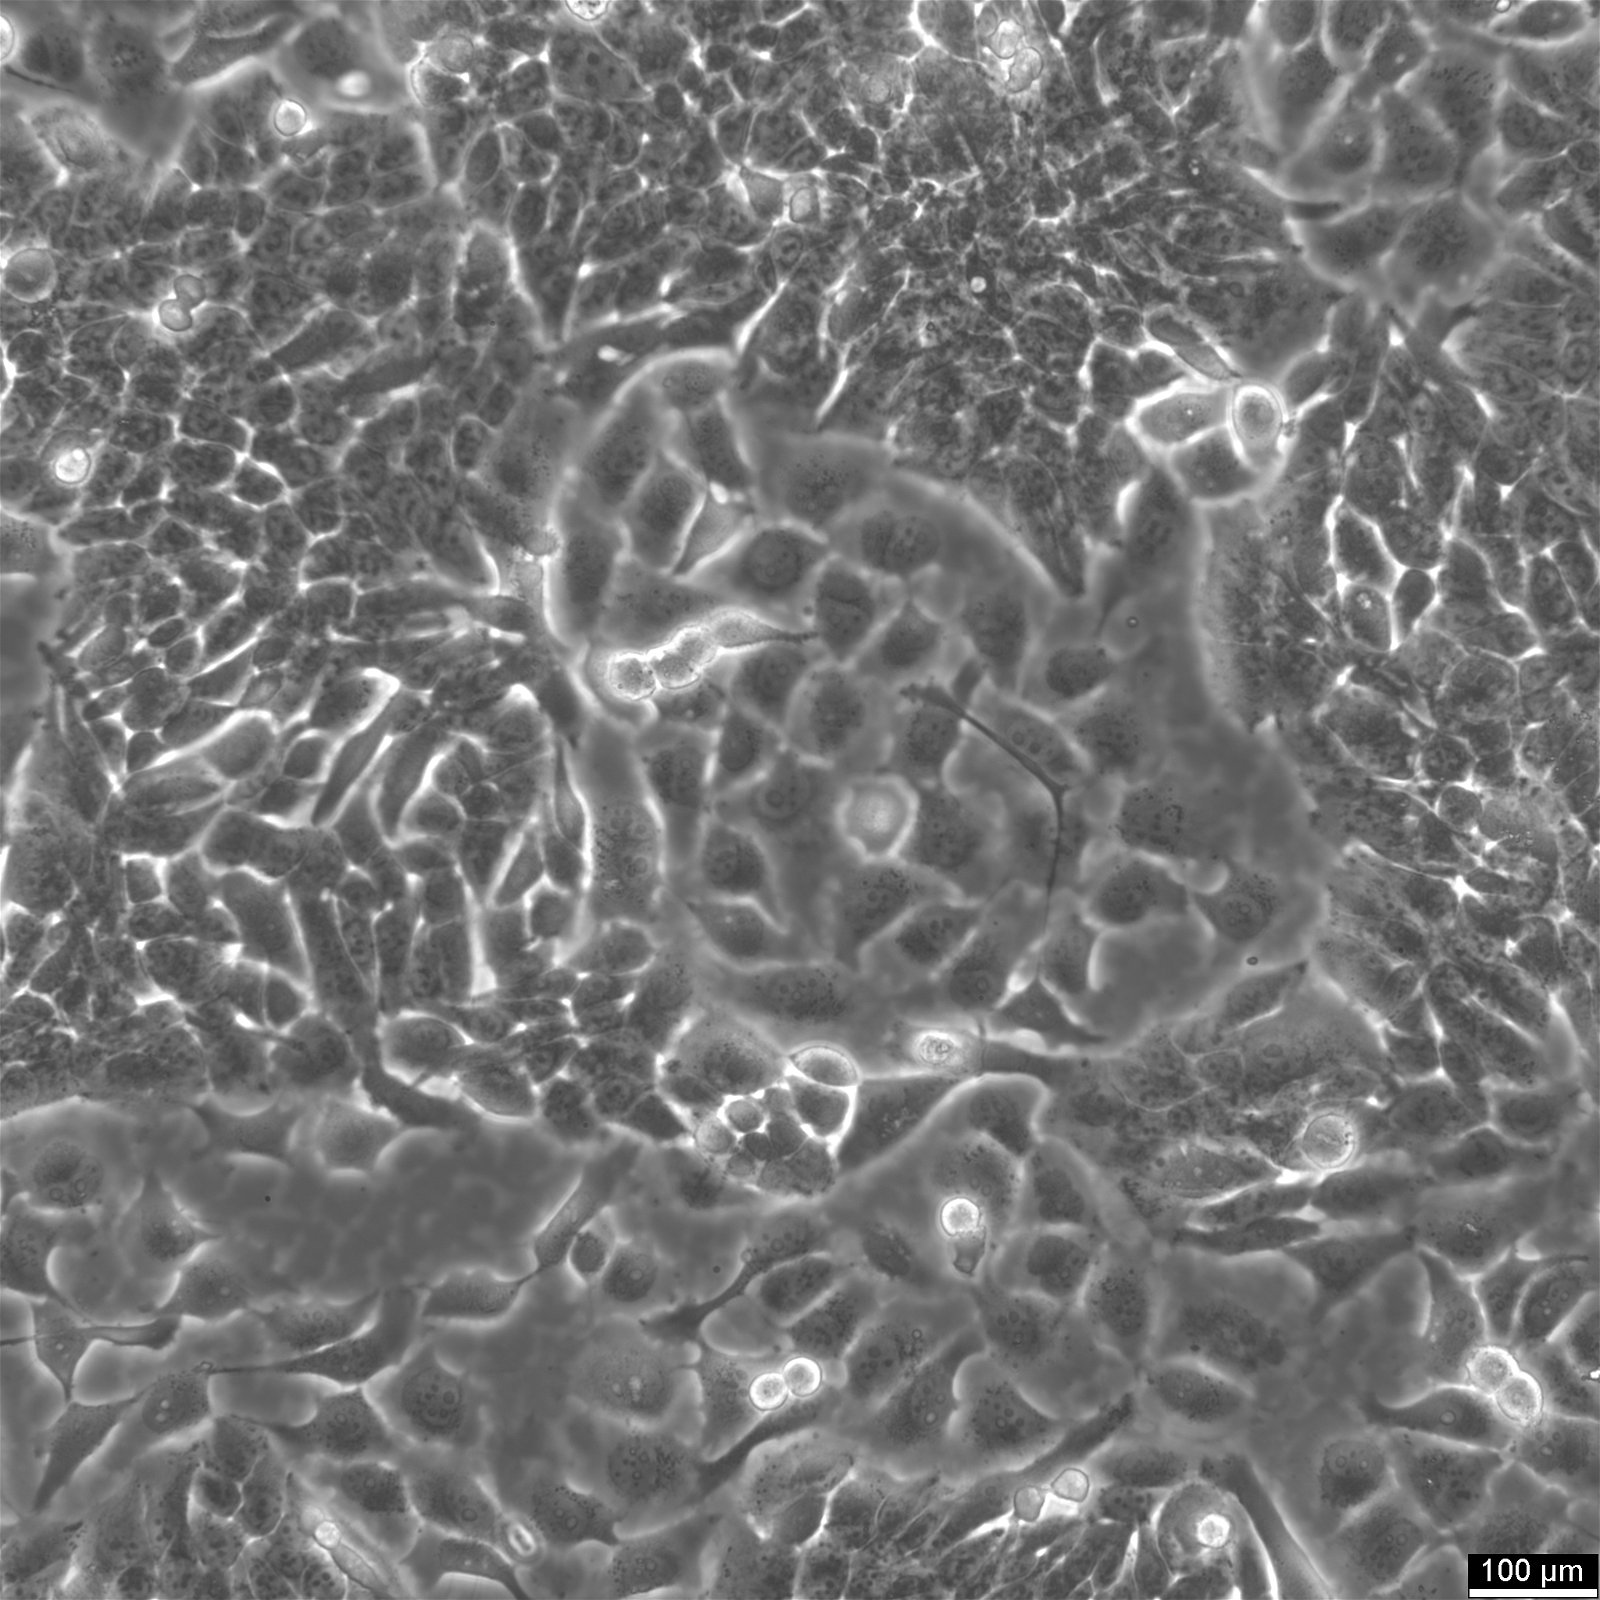 NCI-H358 Cells